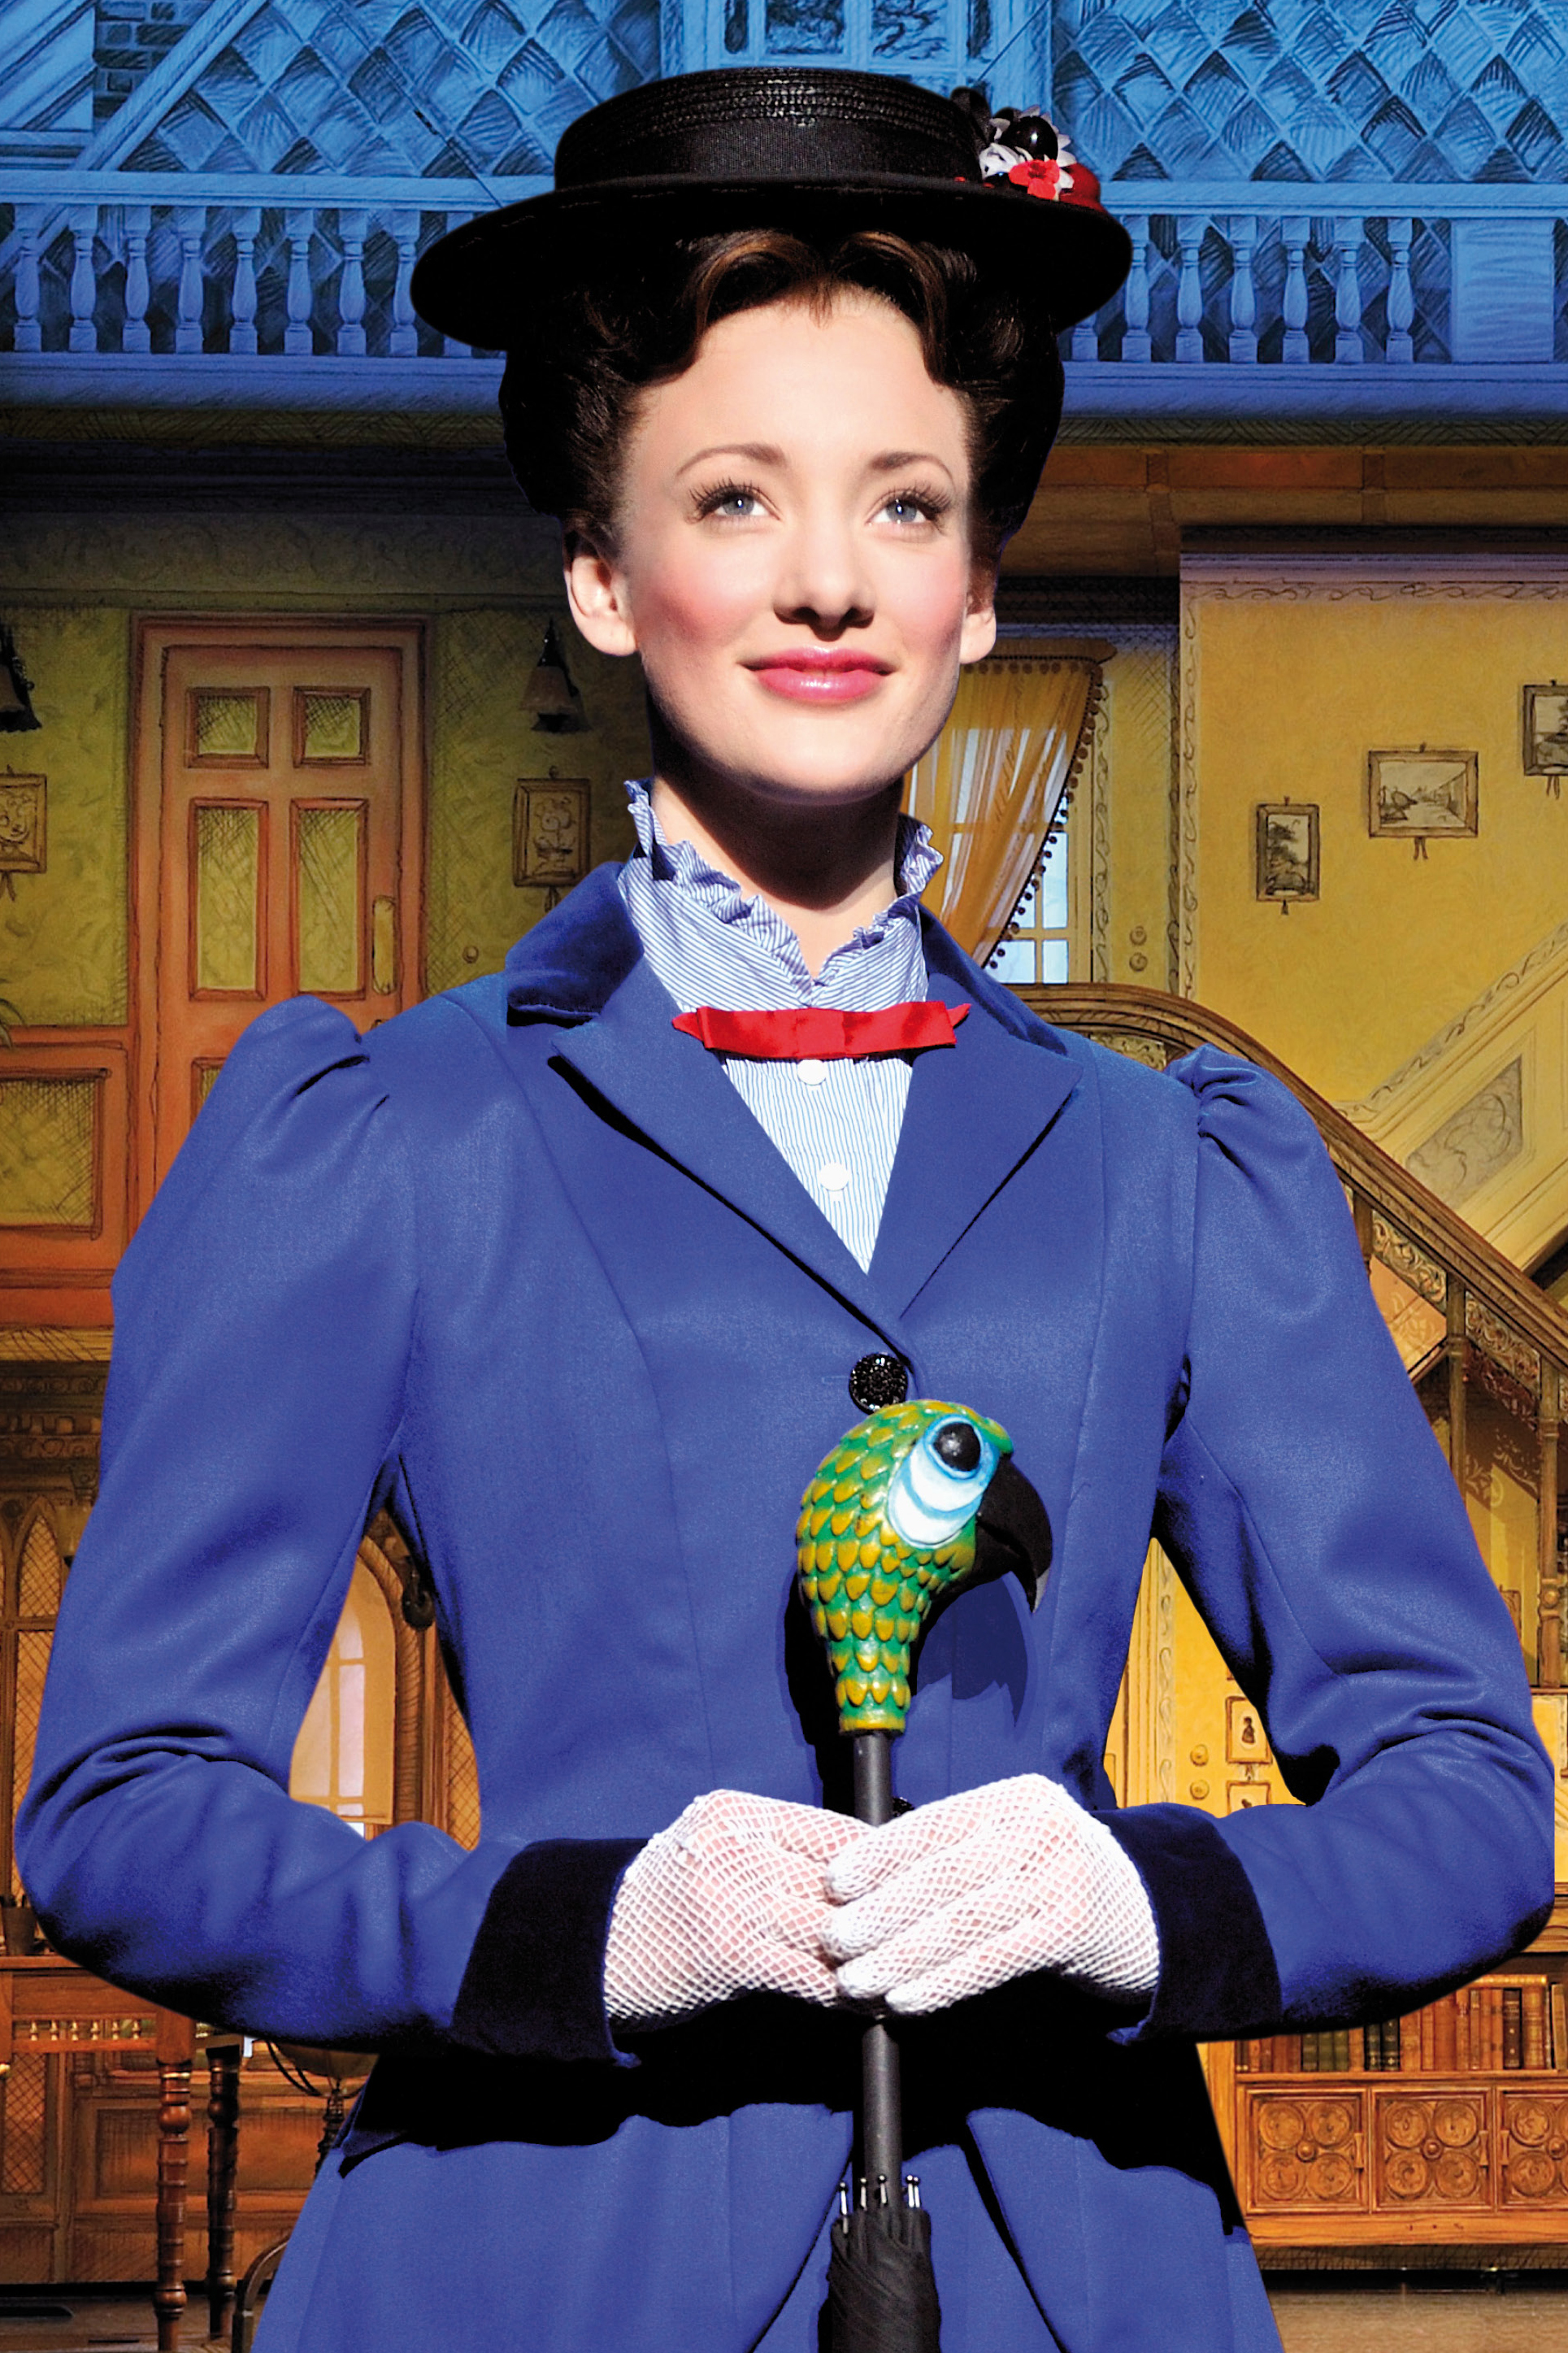 Noortje Herlaar as Mary Poppins